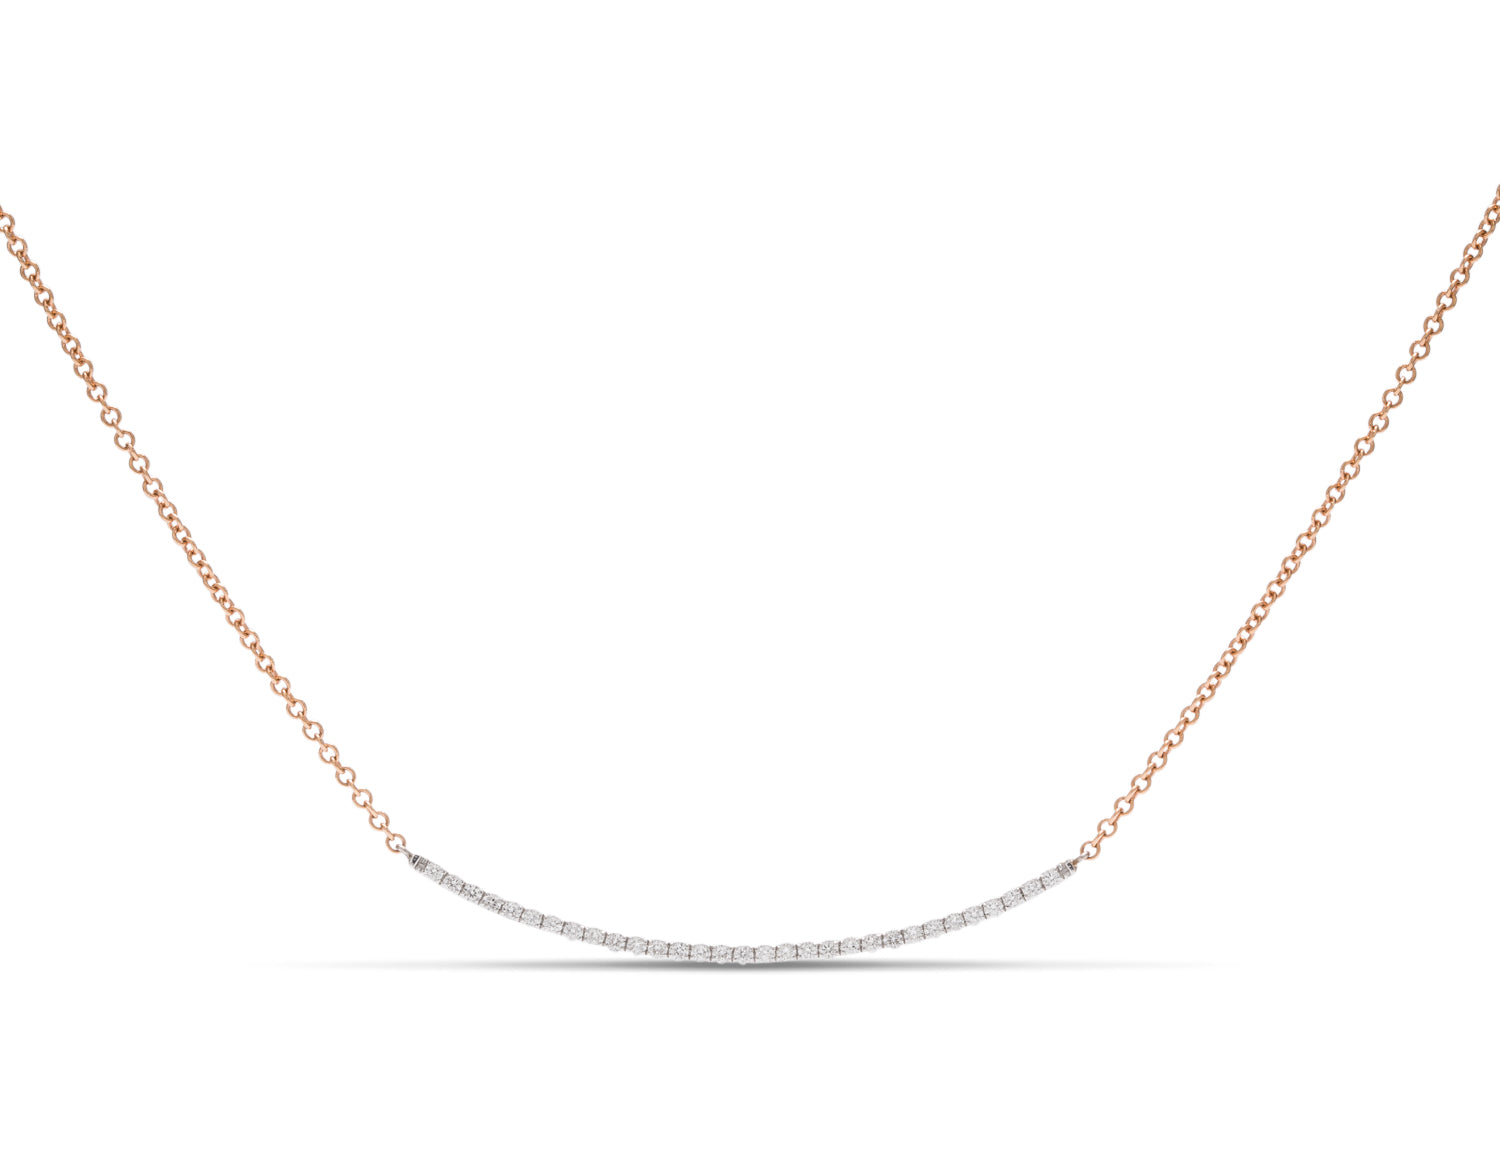 18k White Gold Diamond Bar Necklace - Charles Koll Jewellers